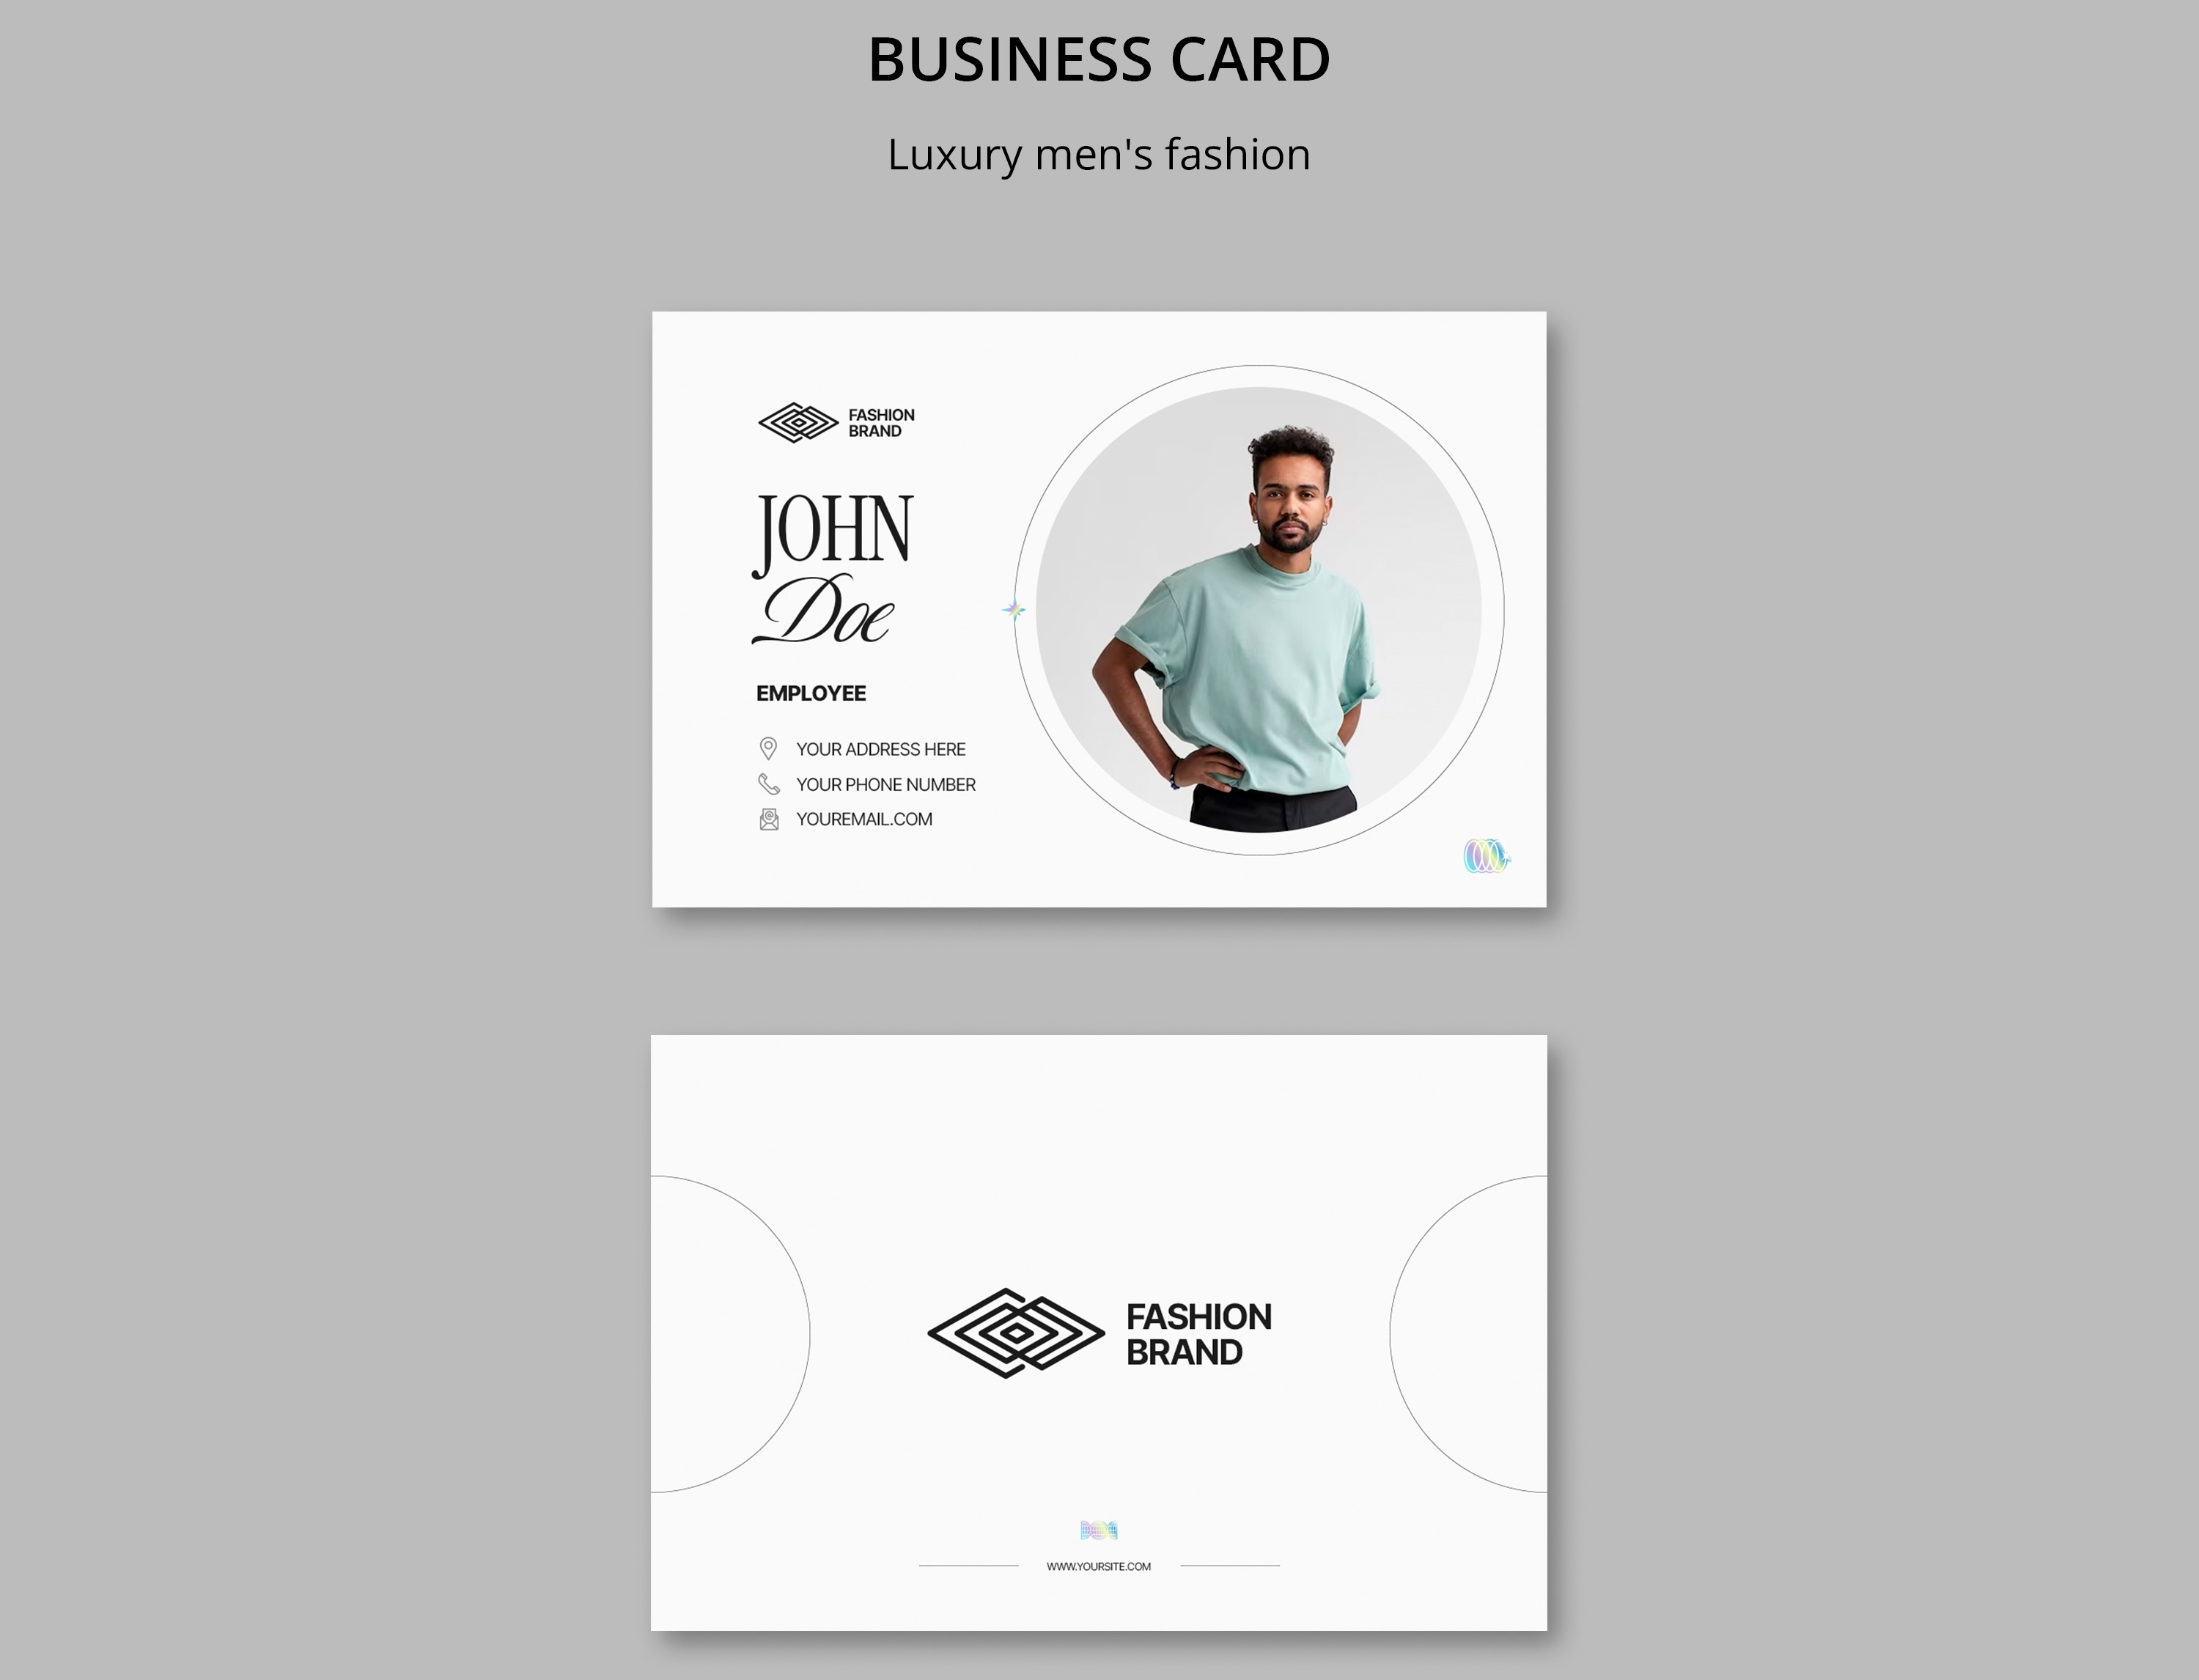 flat-design-luxury-men-s-fashion-business-card.jpg